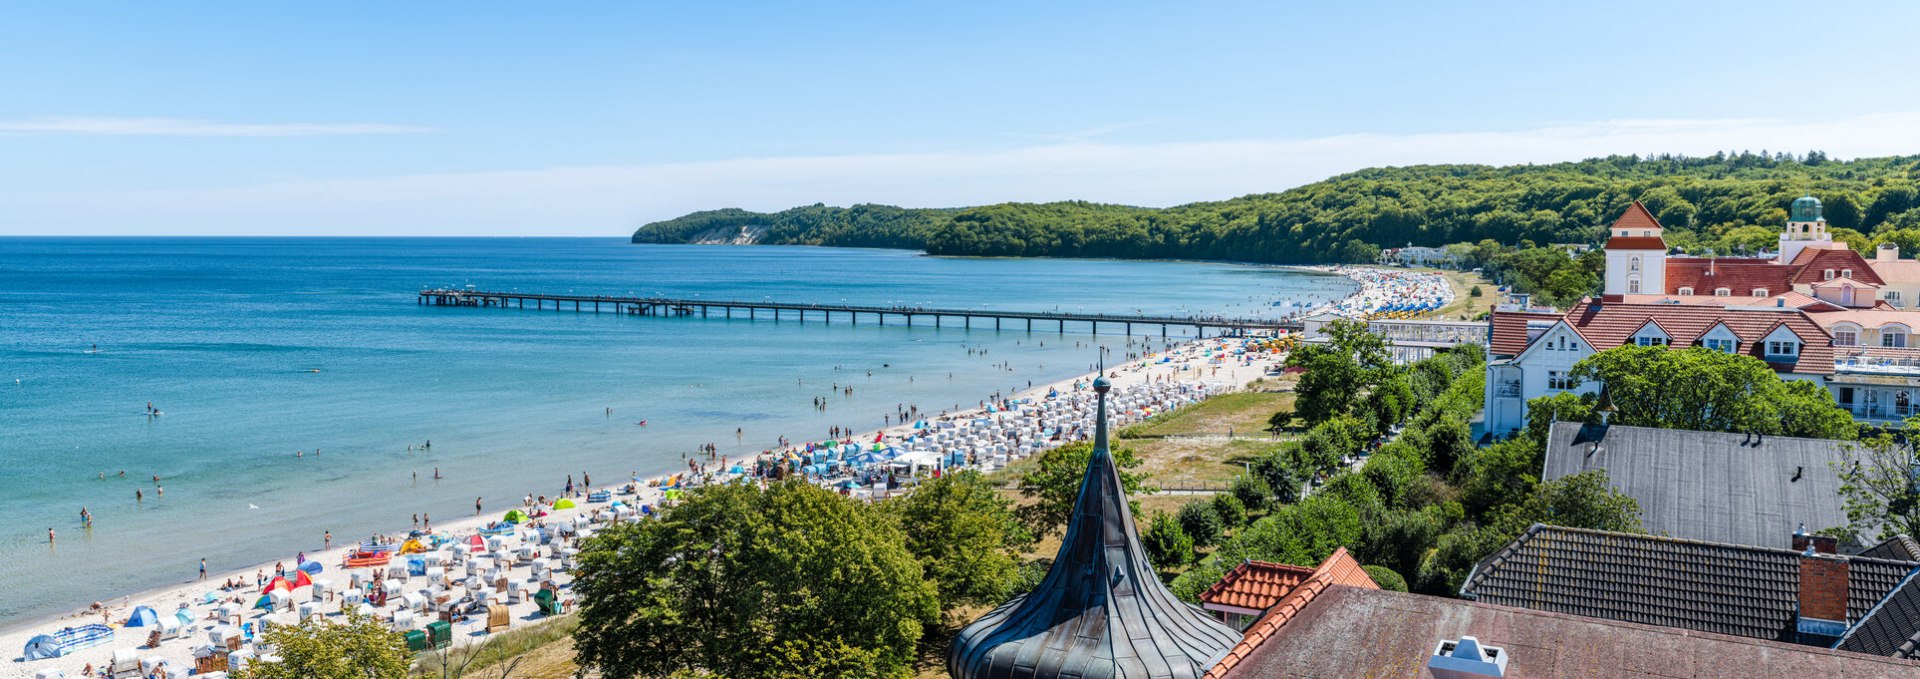 View of the pier in the seaside resort Binz, © TMV/Tiemann